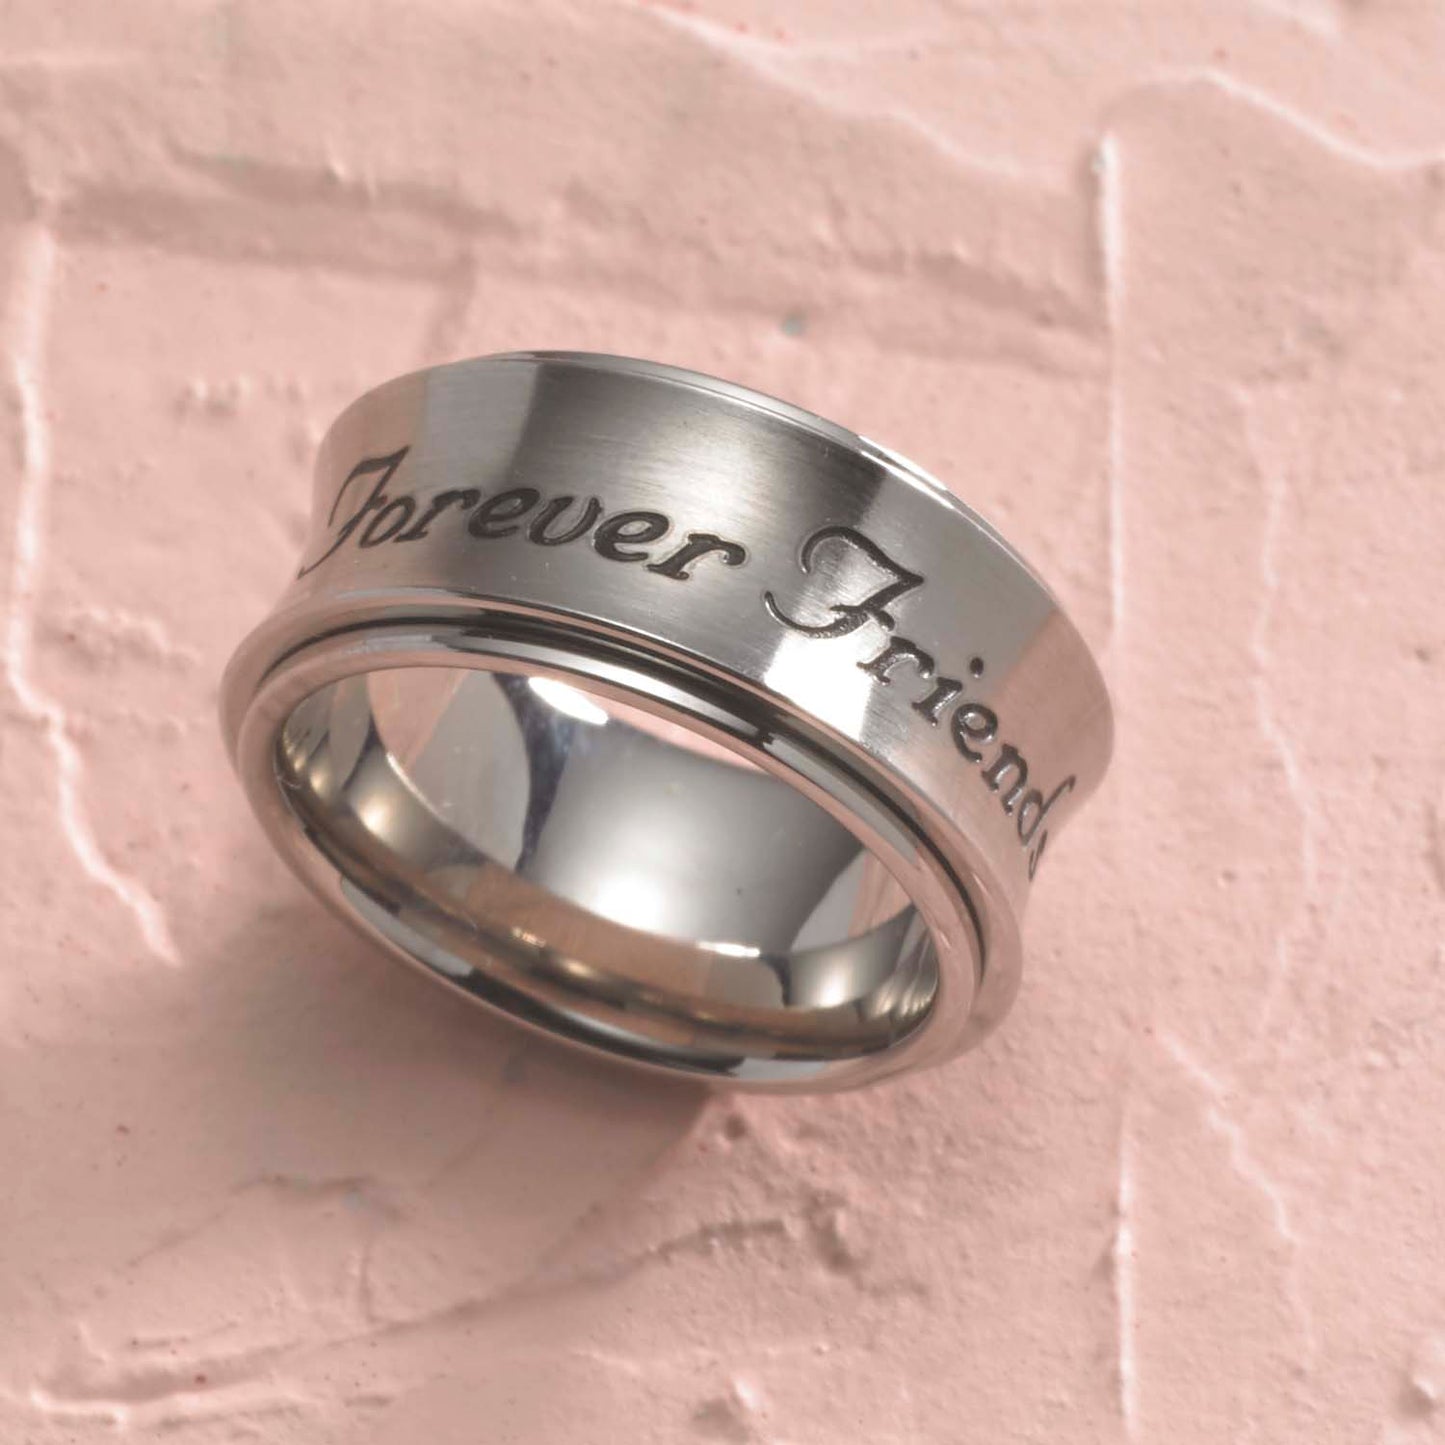 Forever Friends Engraved Stainless Steel Spinner Ring - Best Friend Gift